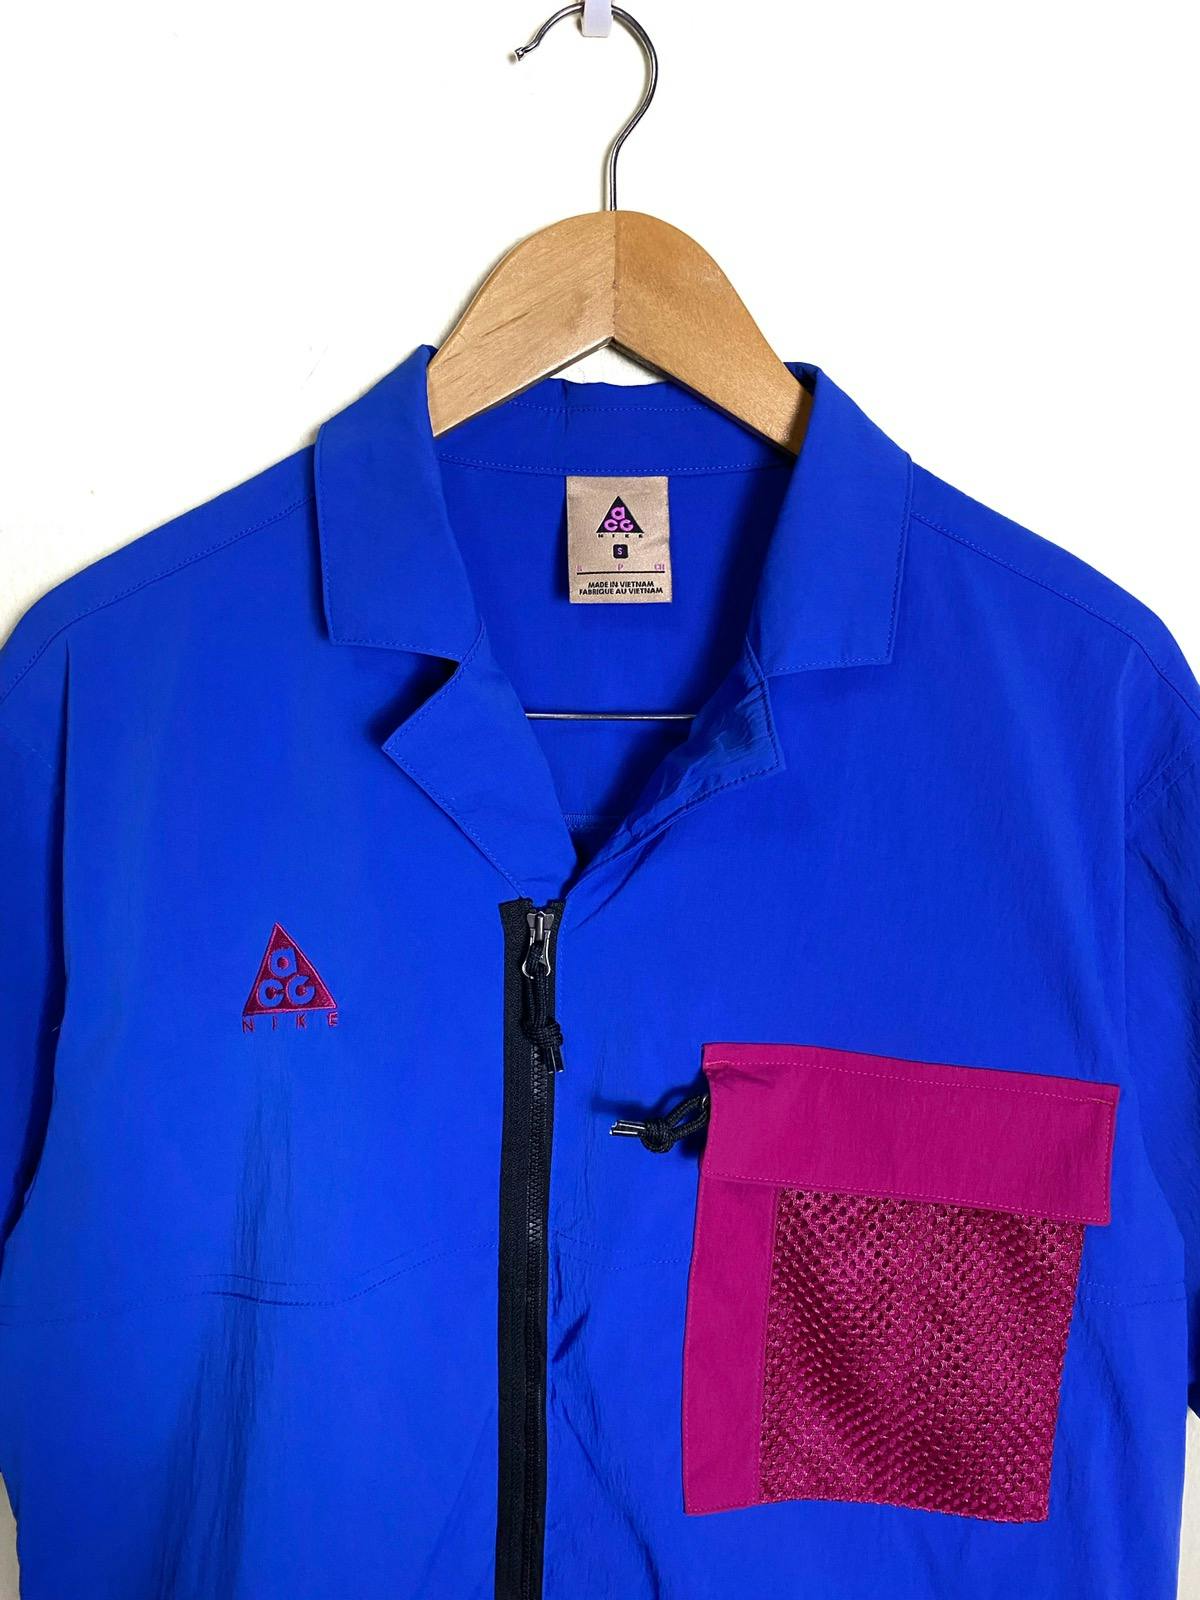 Nike ACG Camp Collar Mesh Zip Up Shirt Jacket - 2